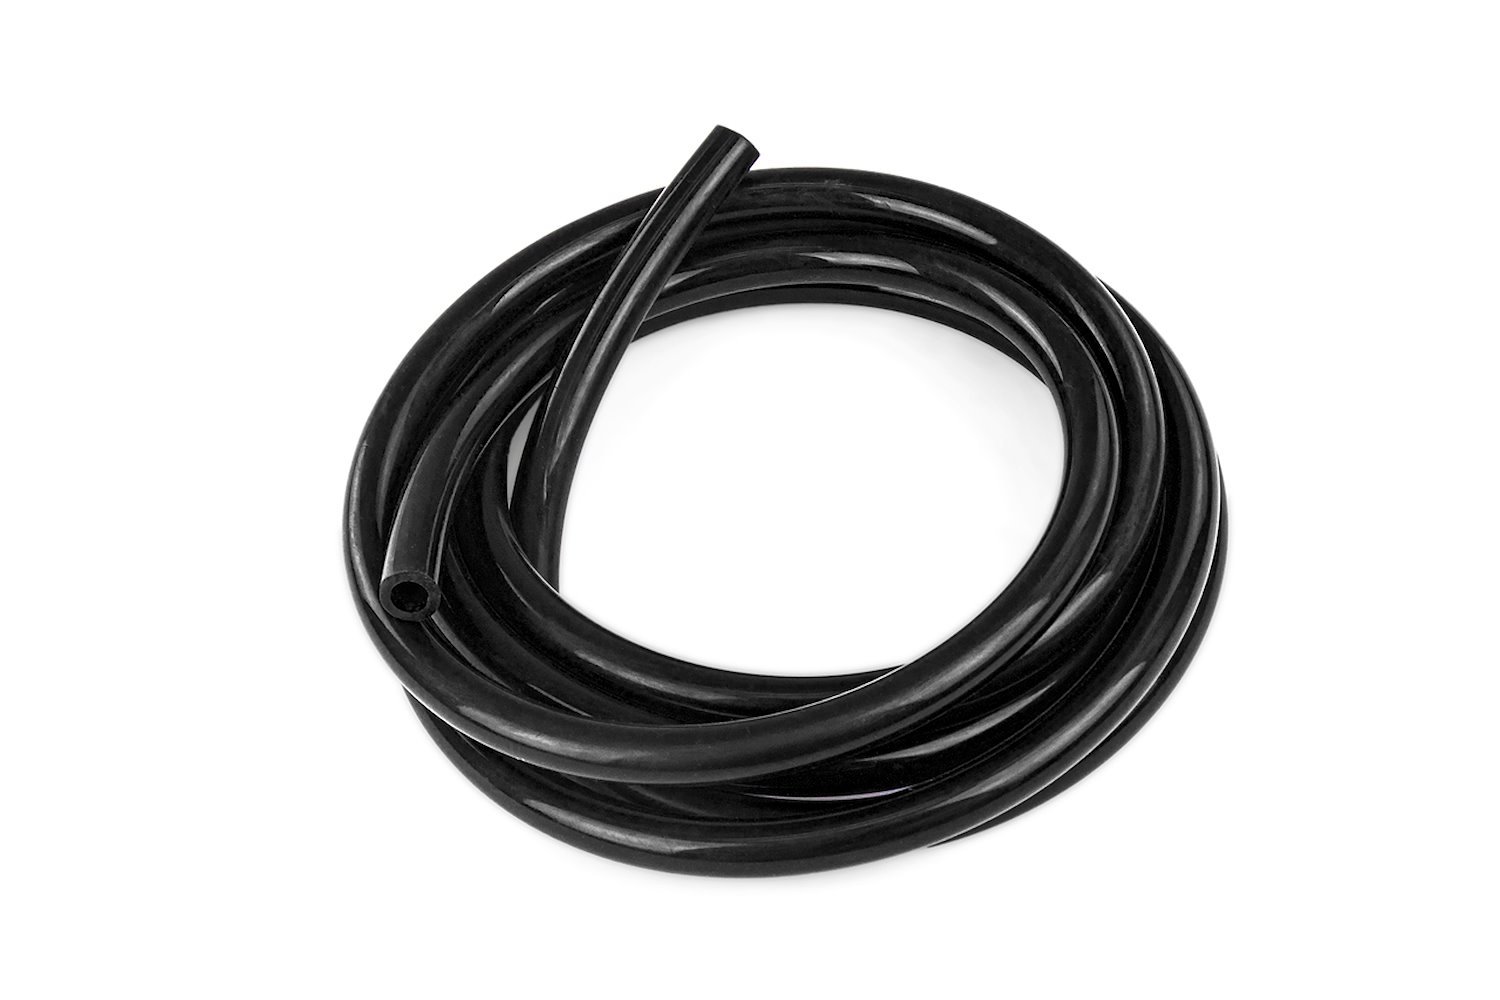 HTSVH6-BLKx25 High-Temperature Silicone Vacuum Hose Tubing, 1/4 in. ID, 25 ft. Roll, Black